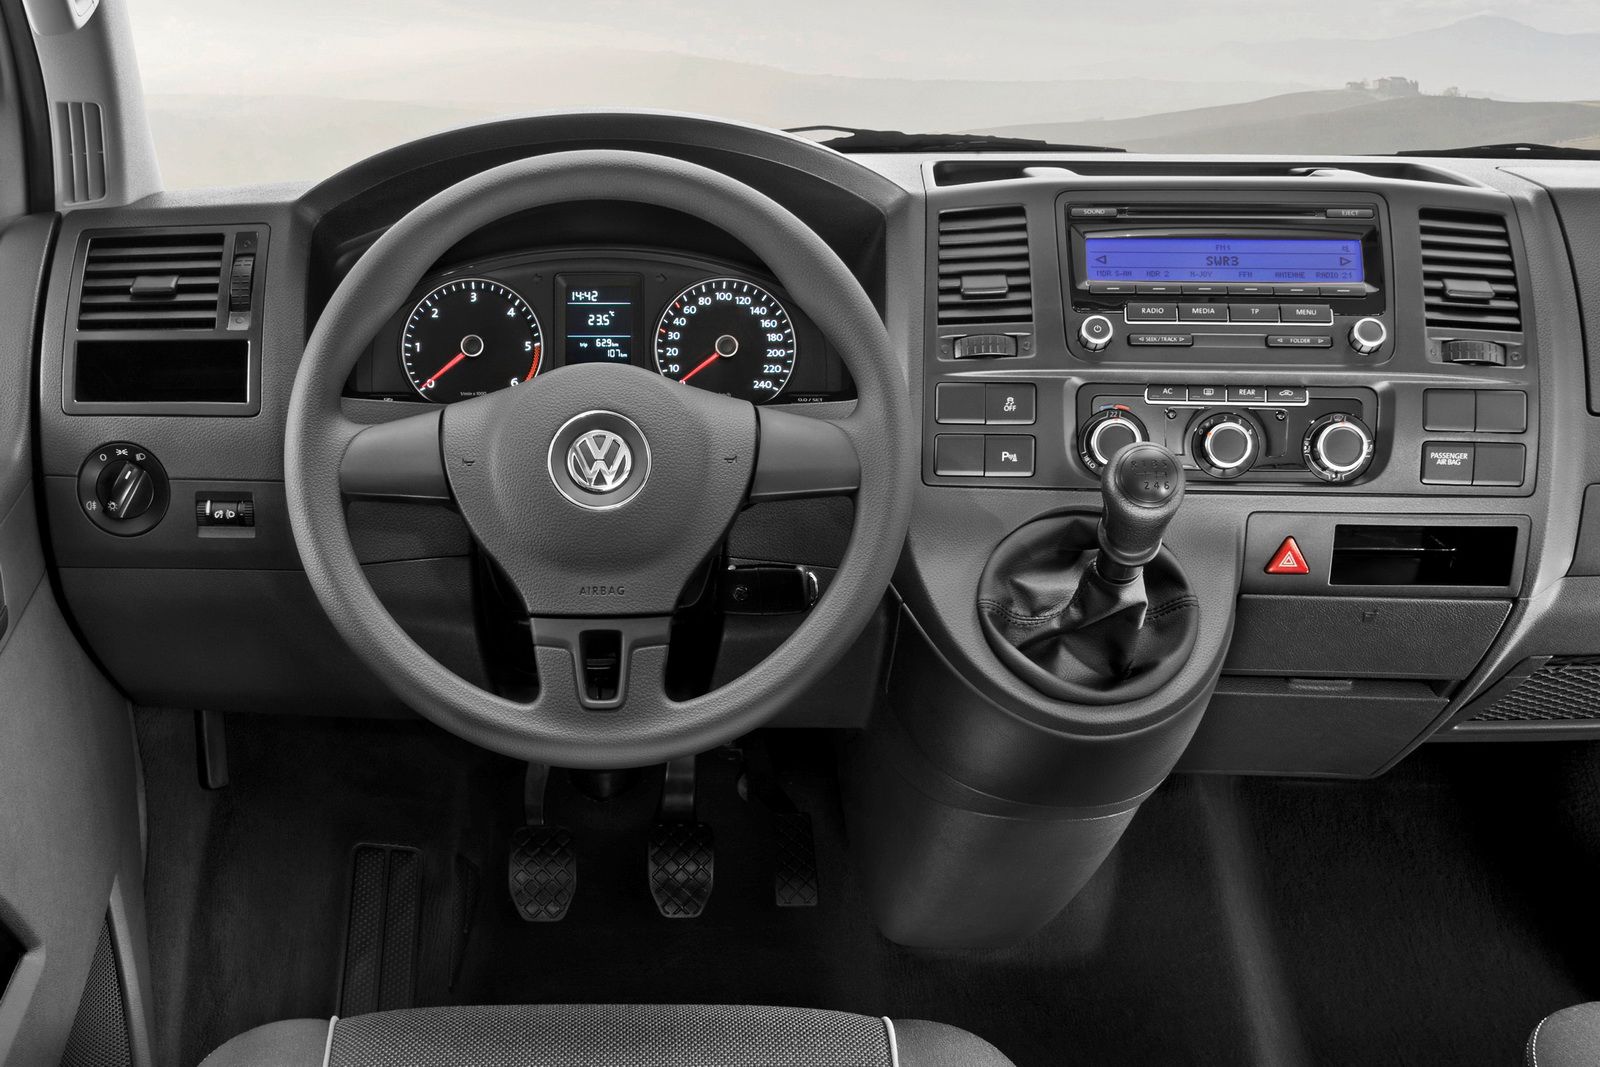 New 2010 Volkswagen T5 Van Facelift Officially Revealed (photos)